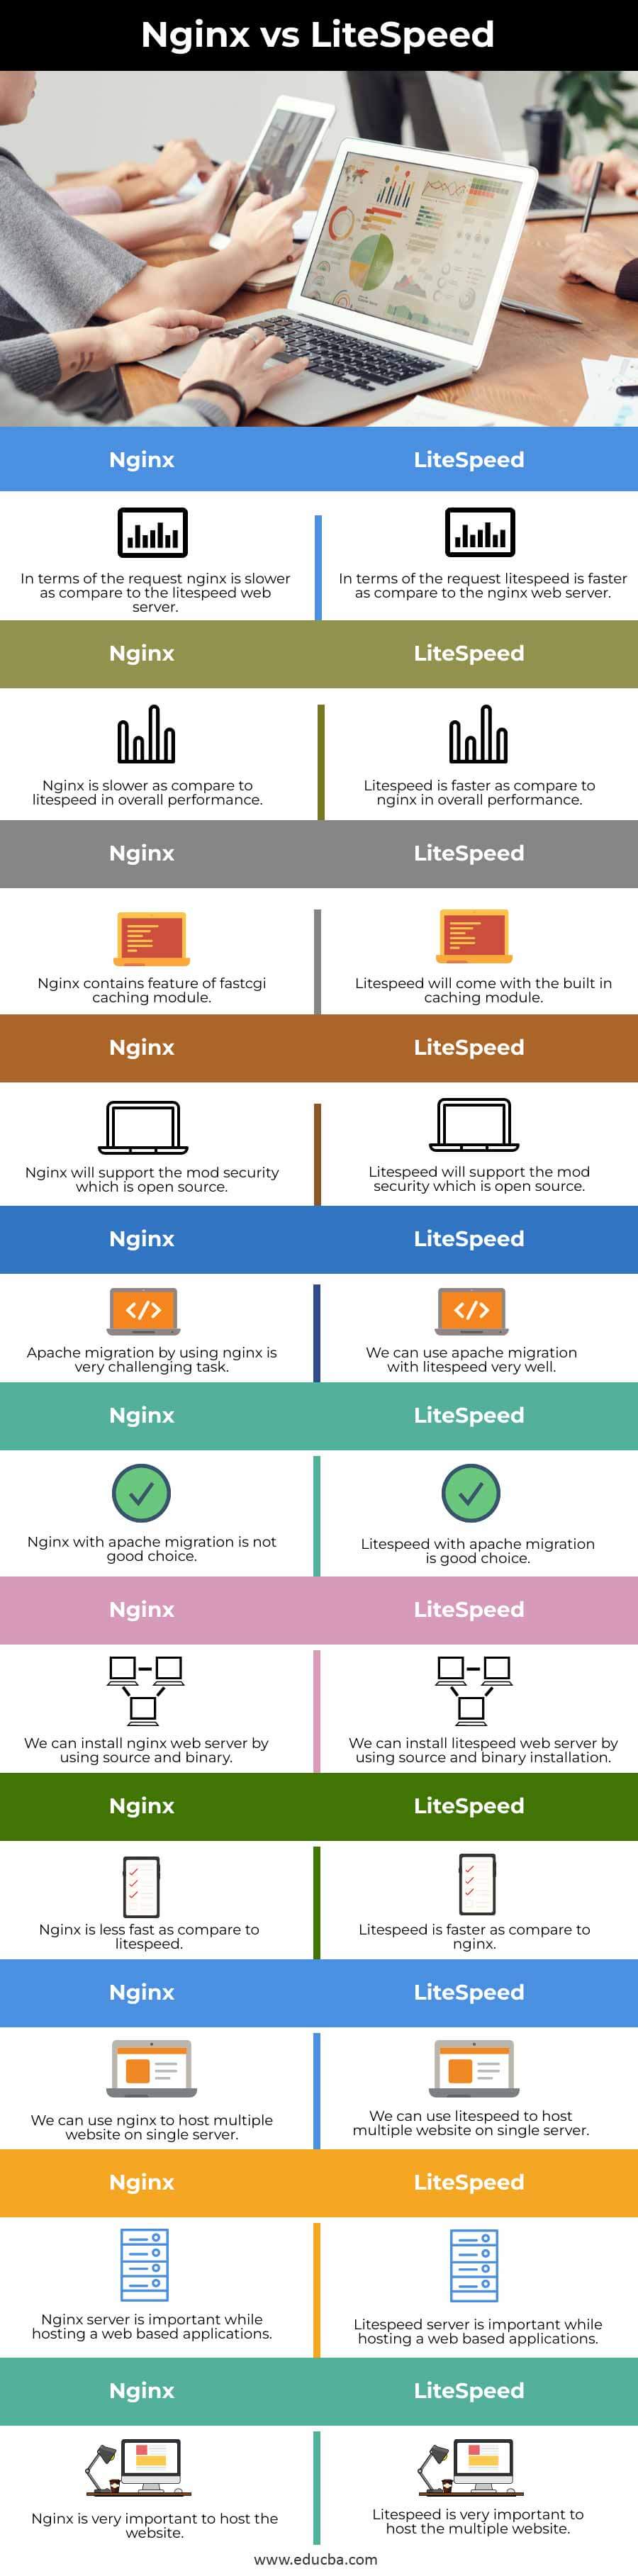 Nginx-vs-LiteSpeed-info